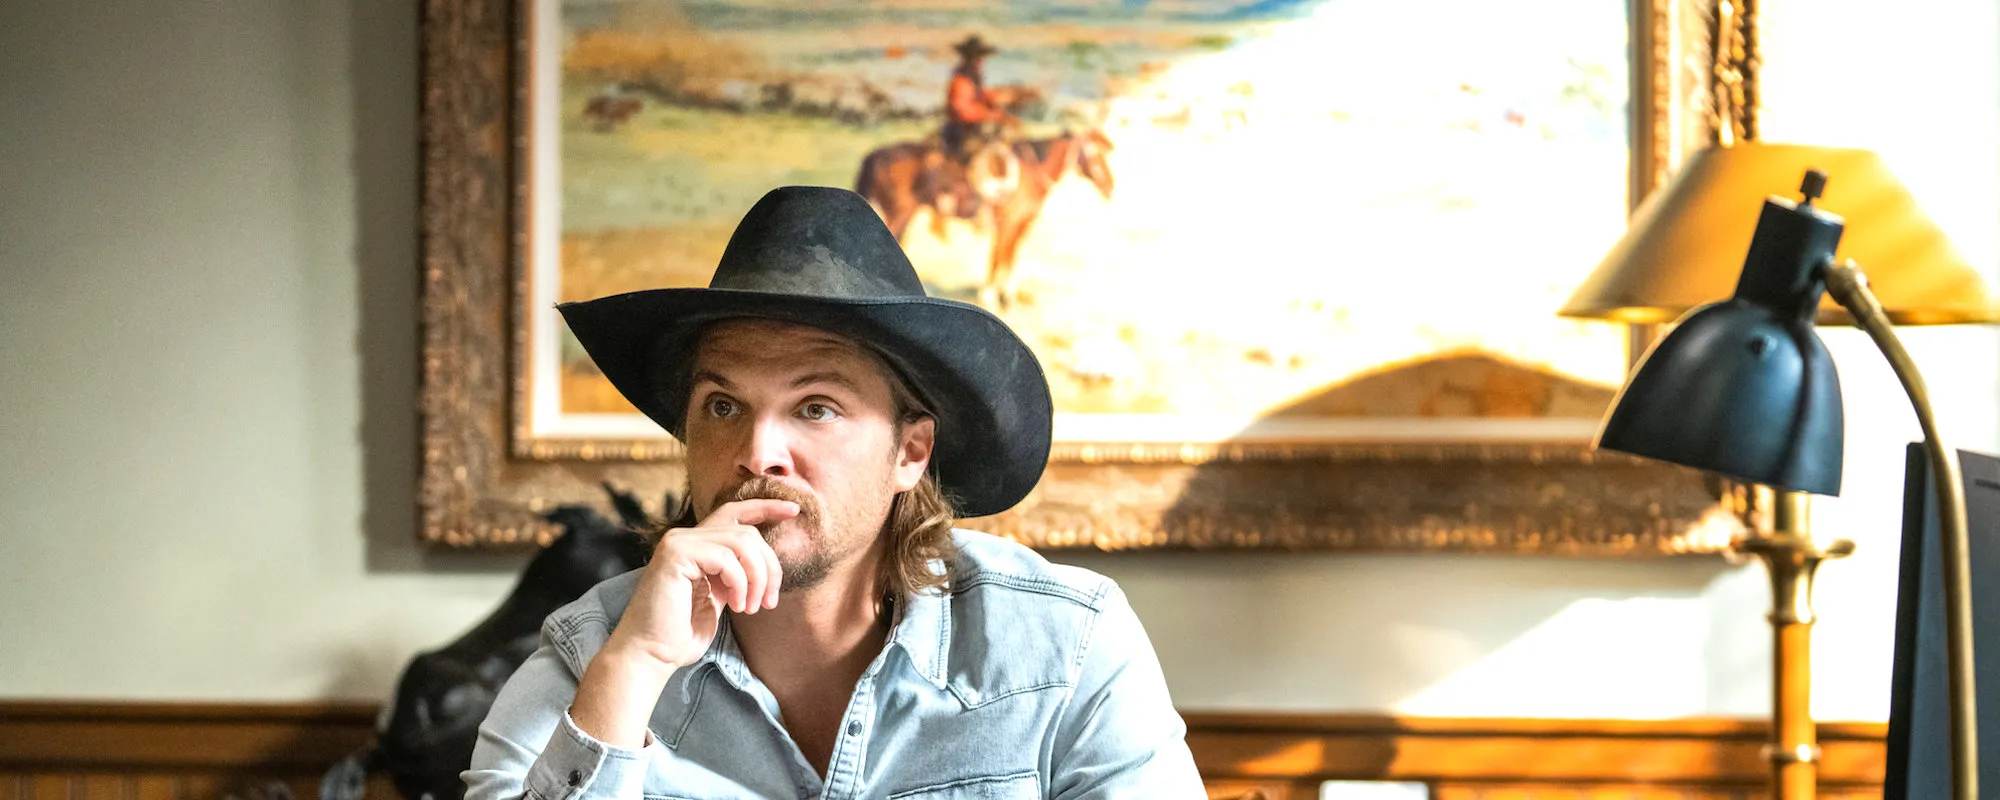 ‘Yellowstone’ Star Luke Grimes Has Sight Set on Country Music Career